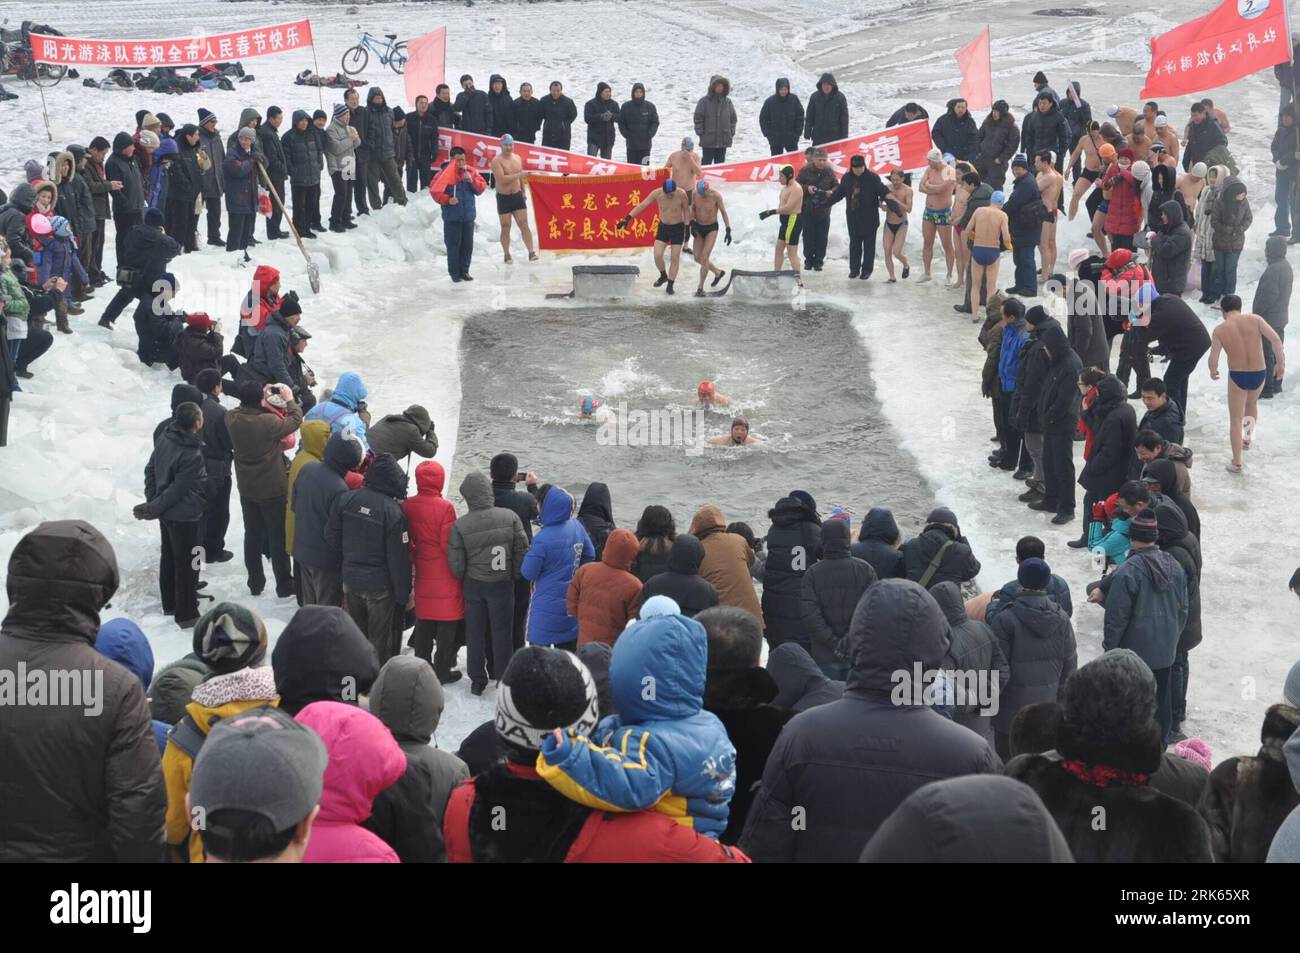 Bildnummer: 53802399 Datum: 17.02.2010 Copyright: imago/Xinhua (100217) -- MUDANJIANG, 17 febbraio 2010 (Xinhua) -- nuotatori nuotano in acque ghiacciate nella città di Mudanjiang, provincia di Heilongjiang, 17 febbraio 2010. Oltre 300 nuotatori hanno partecipato all'annuale nuoto invernale del Mudanjiang River Wednesday. (Xinhua/Chen Zhanhui) (zgp) (4)CHINA-MUDANJIANG-WINTER SWIMMING (CN) PUBLICATIONxNOTxINxCHN Eisbaden Eisschwimmen Schwimmen Eis Winter Jahreszeit Kbdig xdp 2010 quer premiumd Bildnummer 53802399 Data 17 02 2010 Copyright Imago XINHUA 100217 Mudanjiang Feb 17 2010 Foto Stock